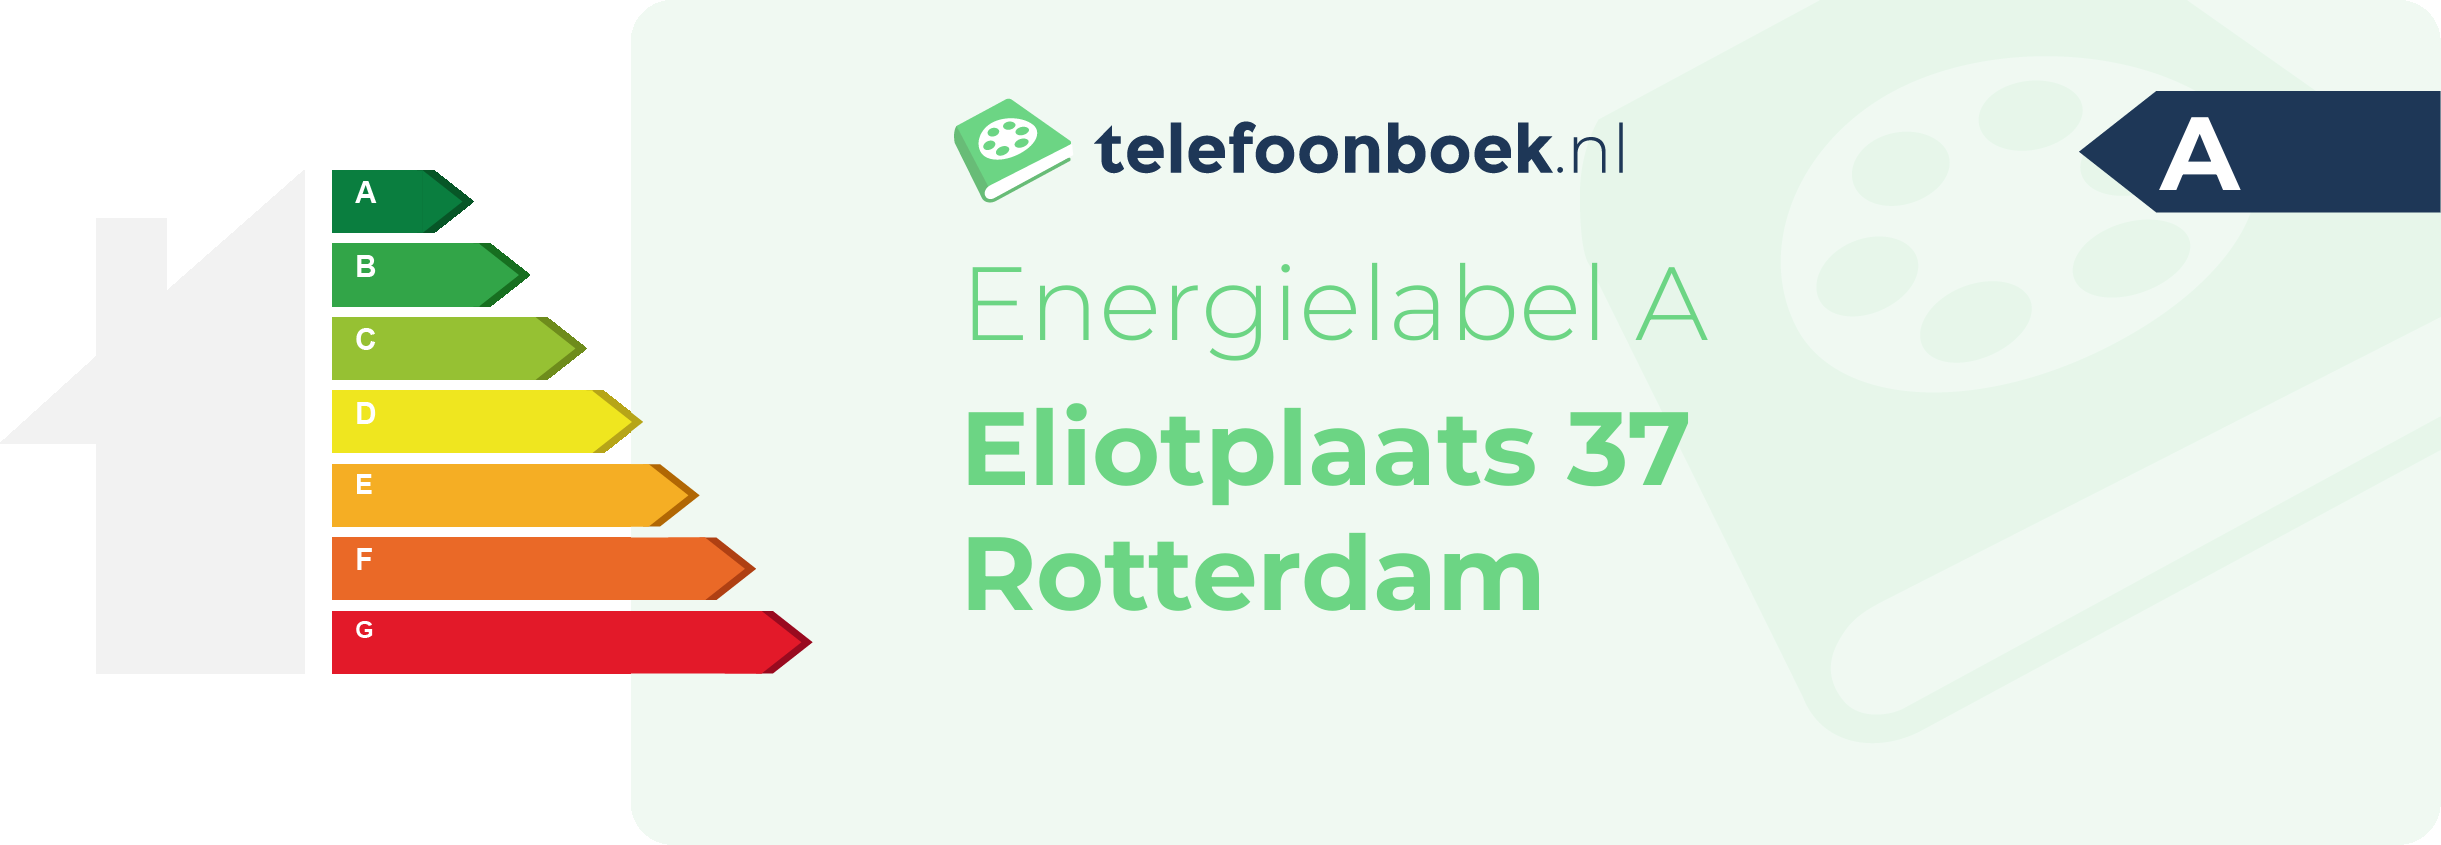 Energielabel Eliotplaats 37 Rotterdam